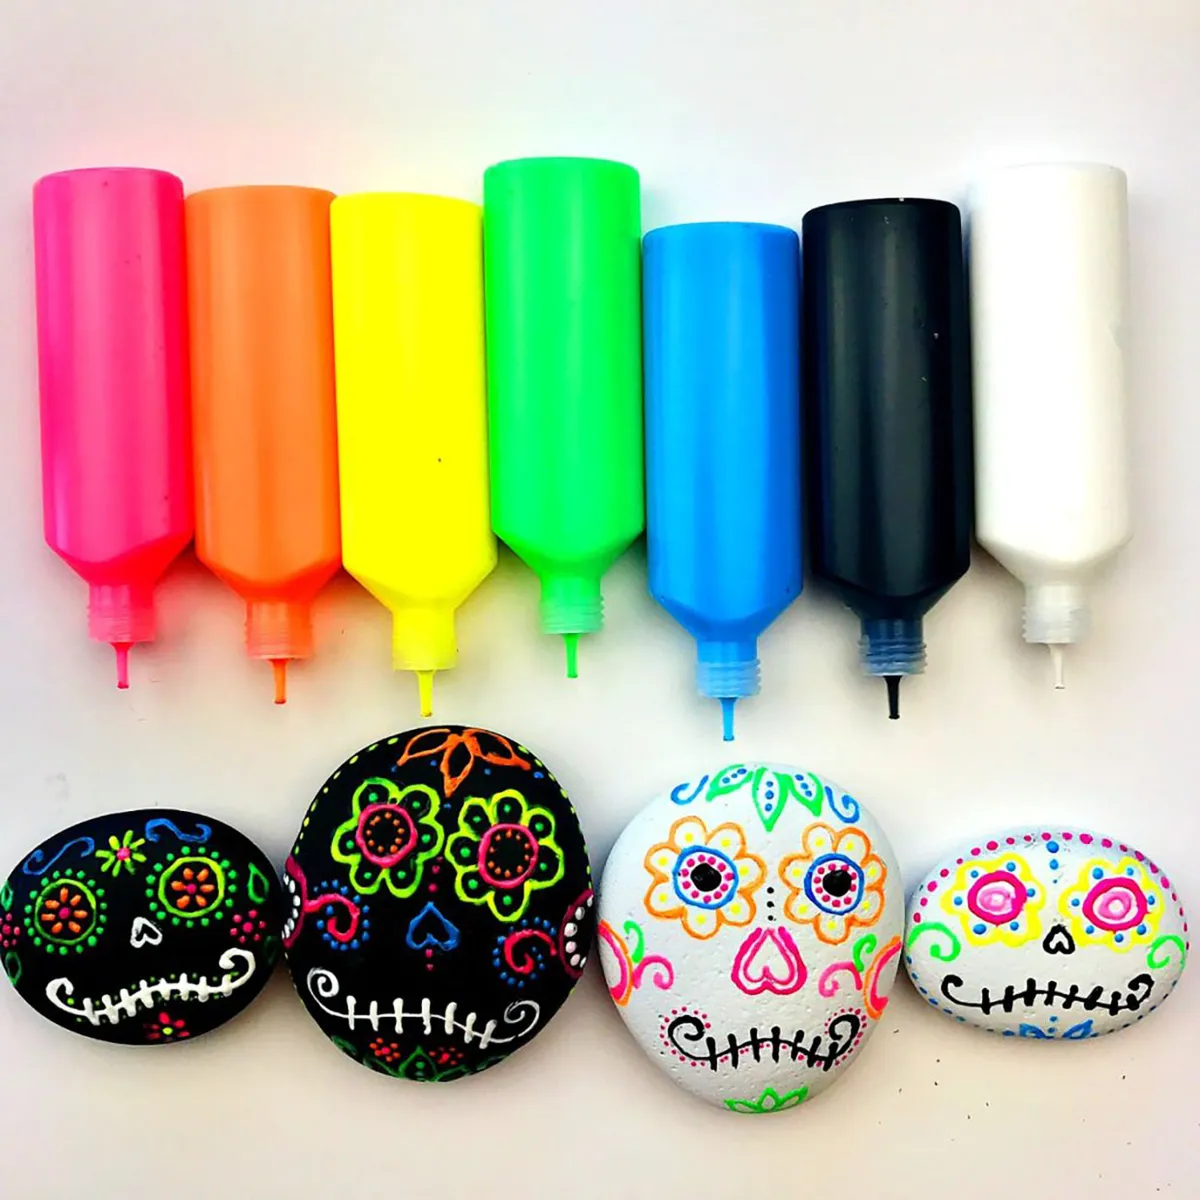 Halloween rock painting ideas – puffy paint sugar skulls